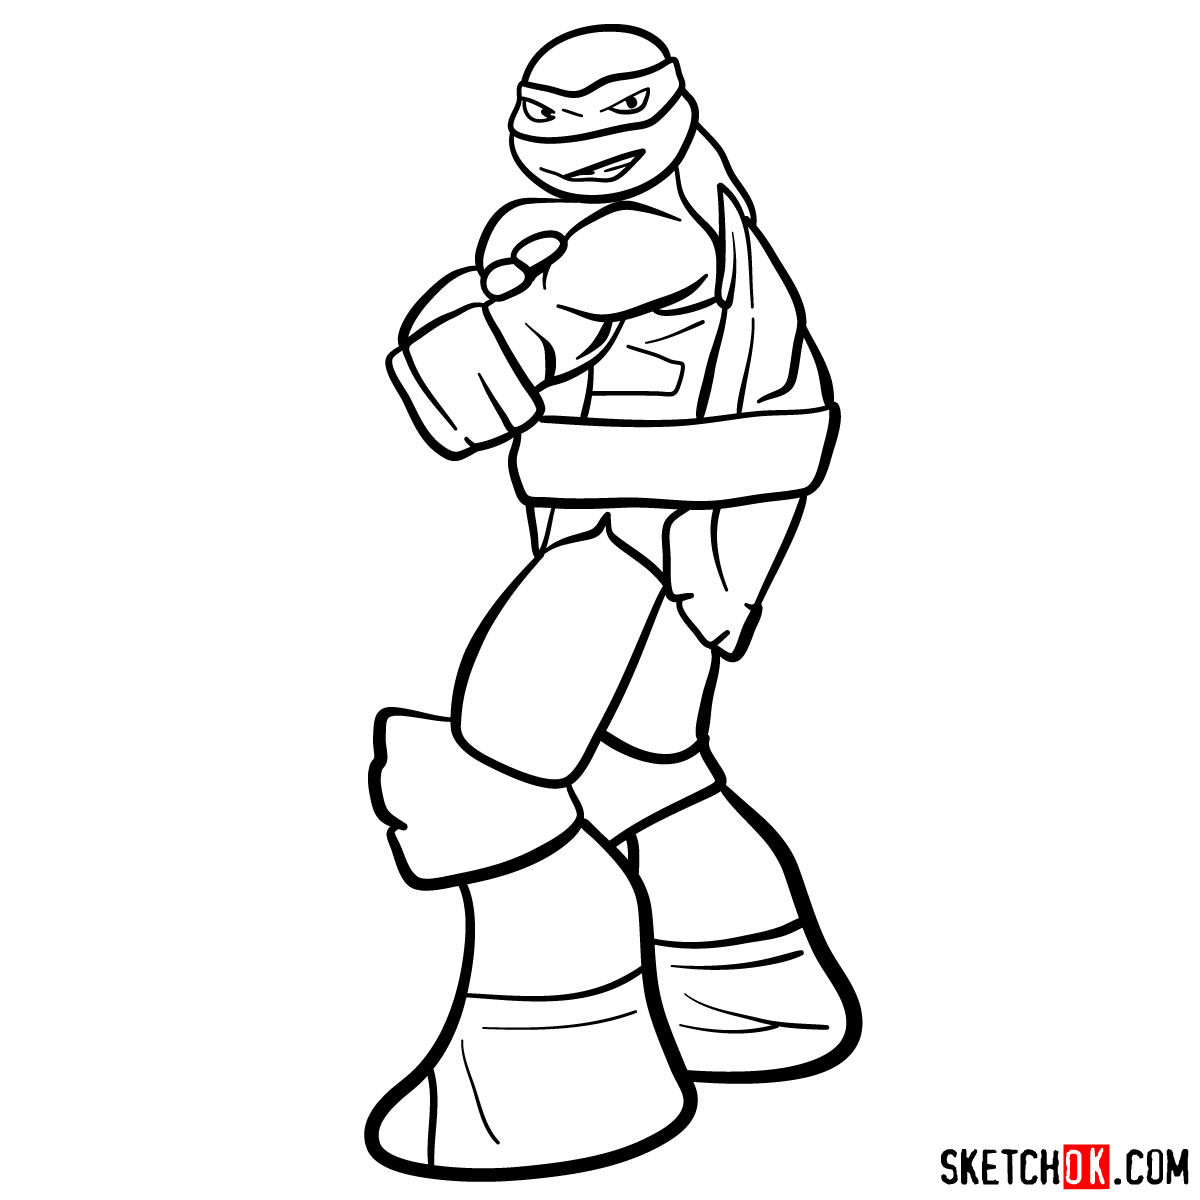 How to draw Raphael ninja turtle cartoon style